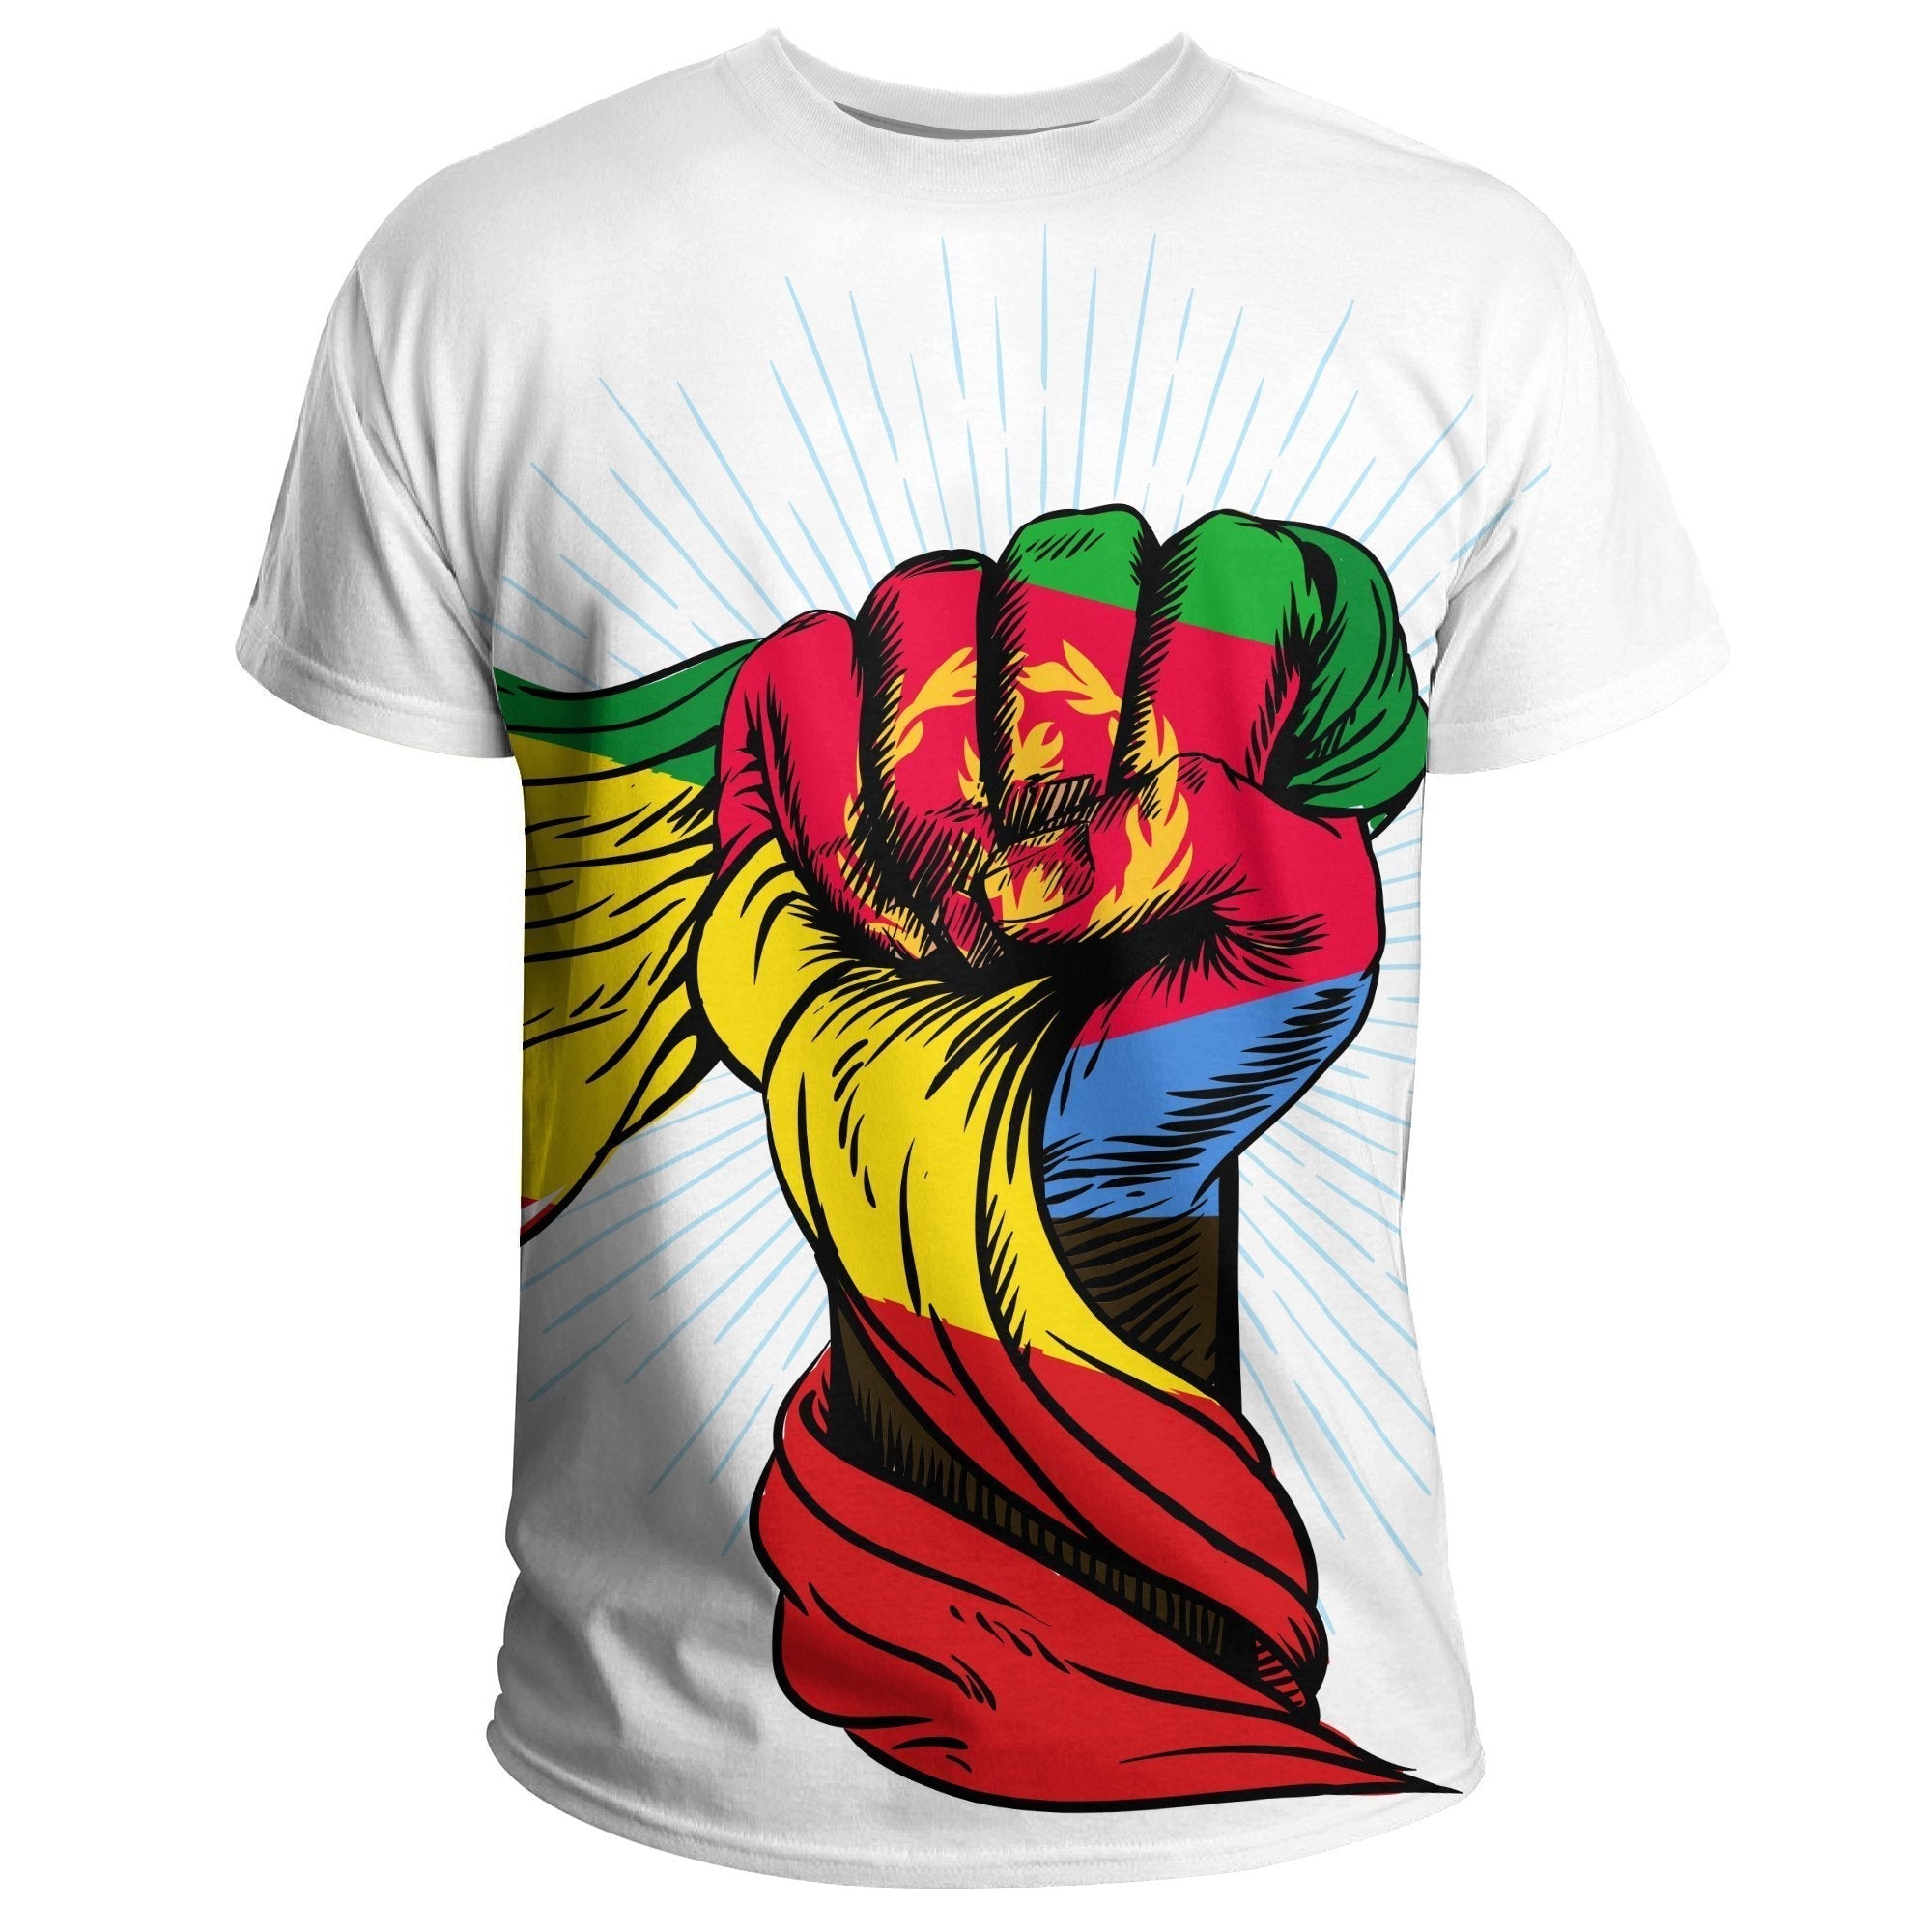 ethiopia-eritrea-friendship-t-shirt-power-hand-flag